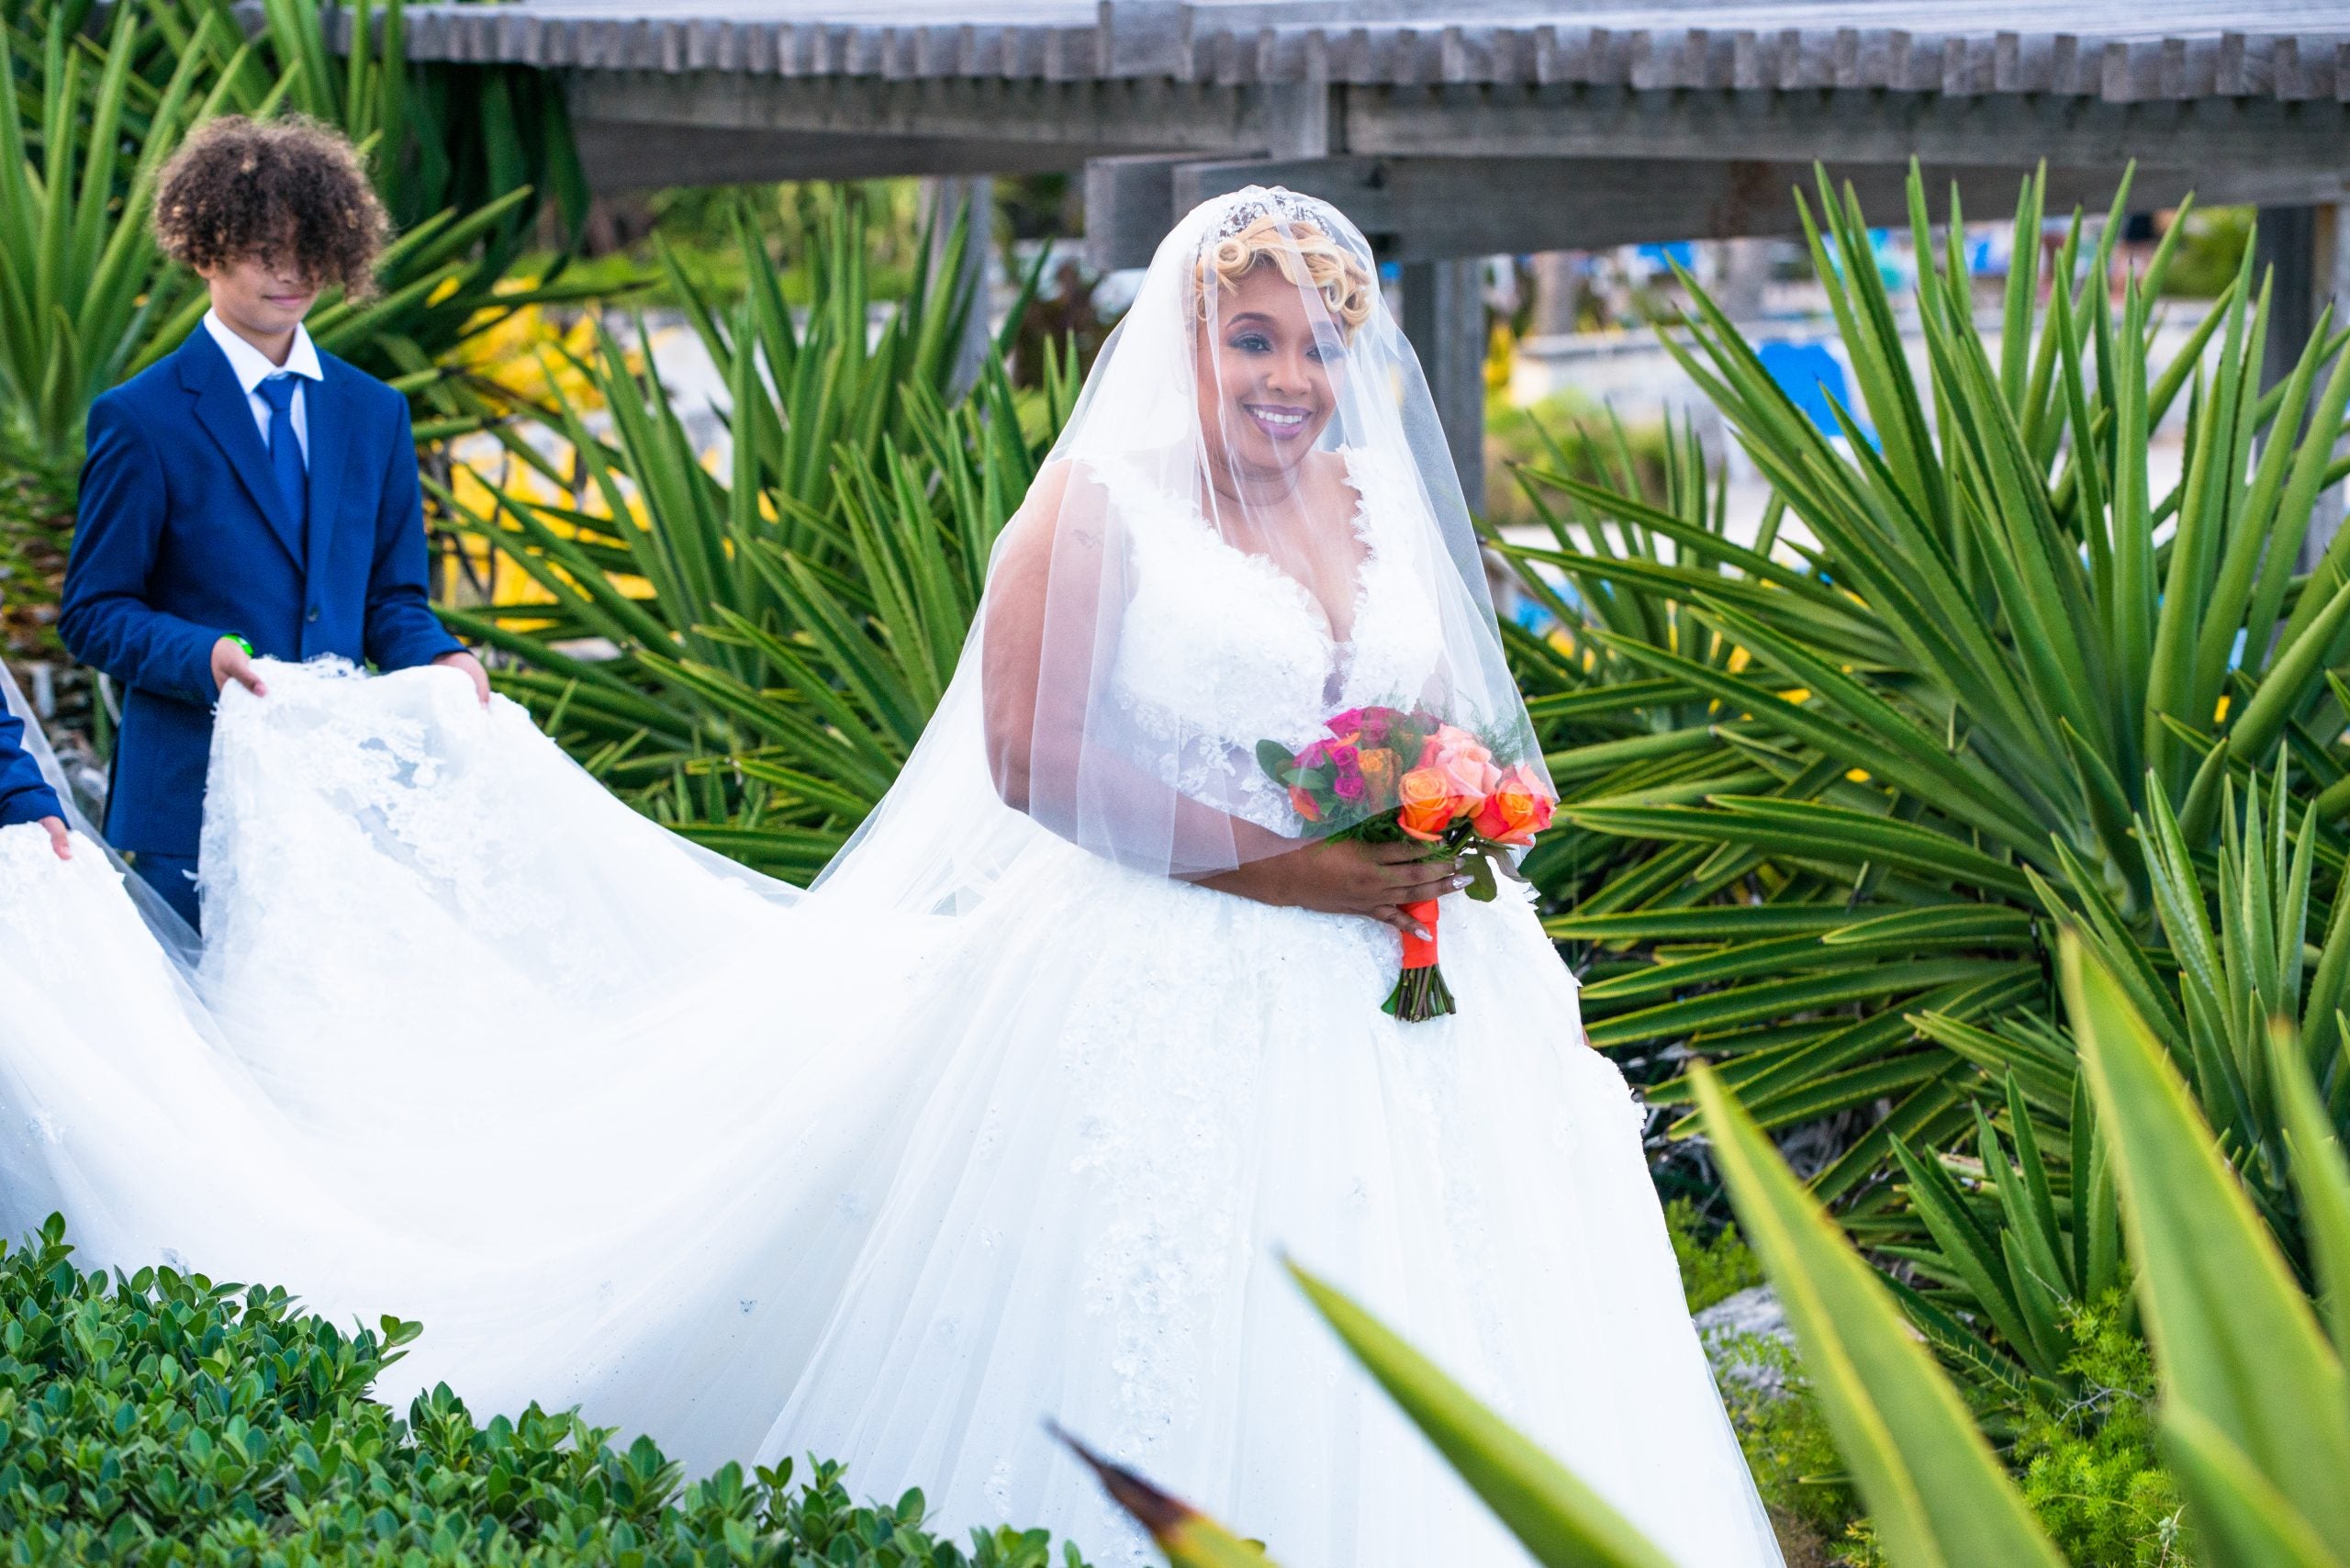 Bridal Bliss: Celeb Chef Huda And Lamar's Dream Destination Wedding Came True In Barbados